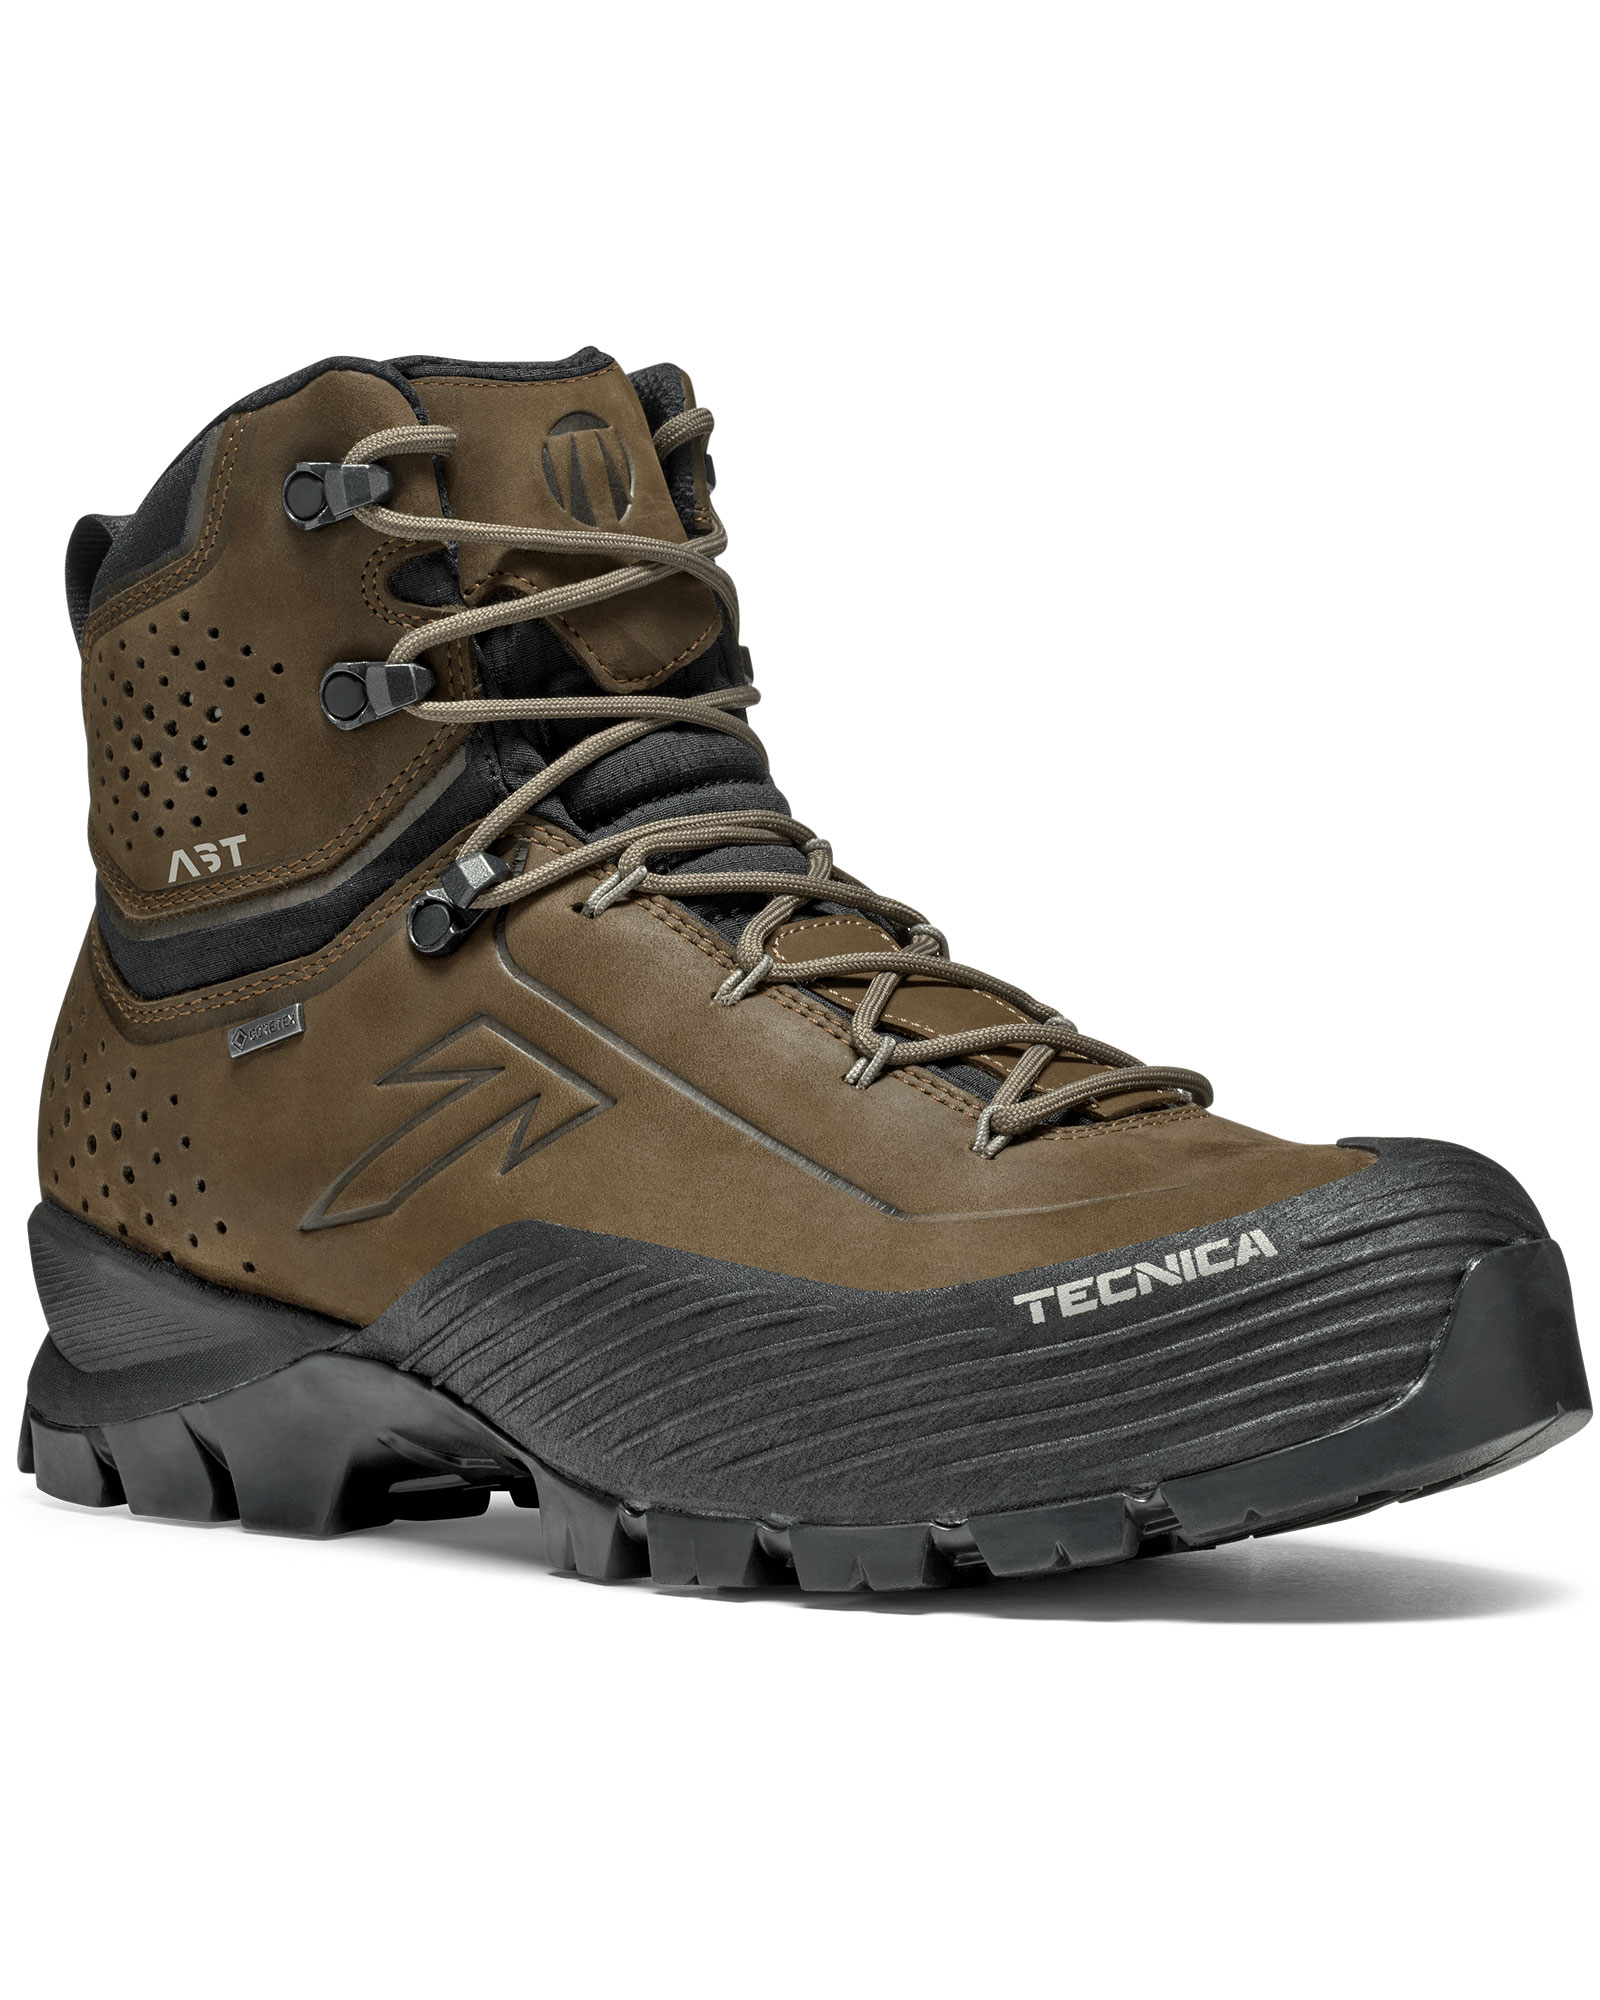 Tecnica Forge 2.0 GORE TEX Men’s Boots - Tundra/Cool Grey UK 10.5